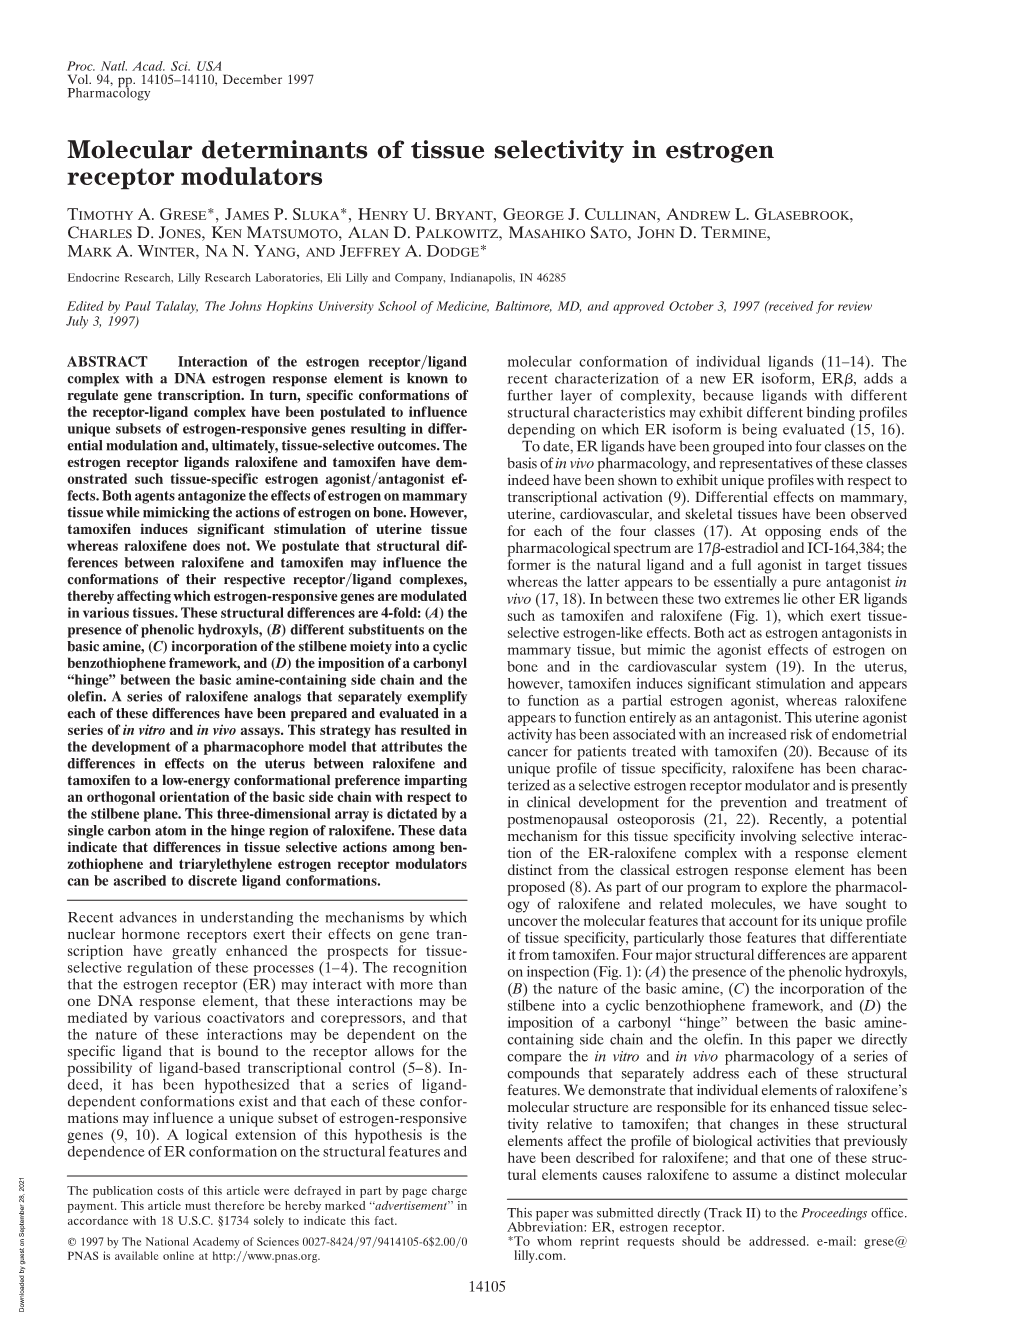 Molecular Determinants of Tissue Selectivity in Estrogen Receptor Modulators